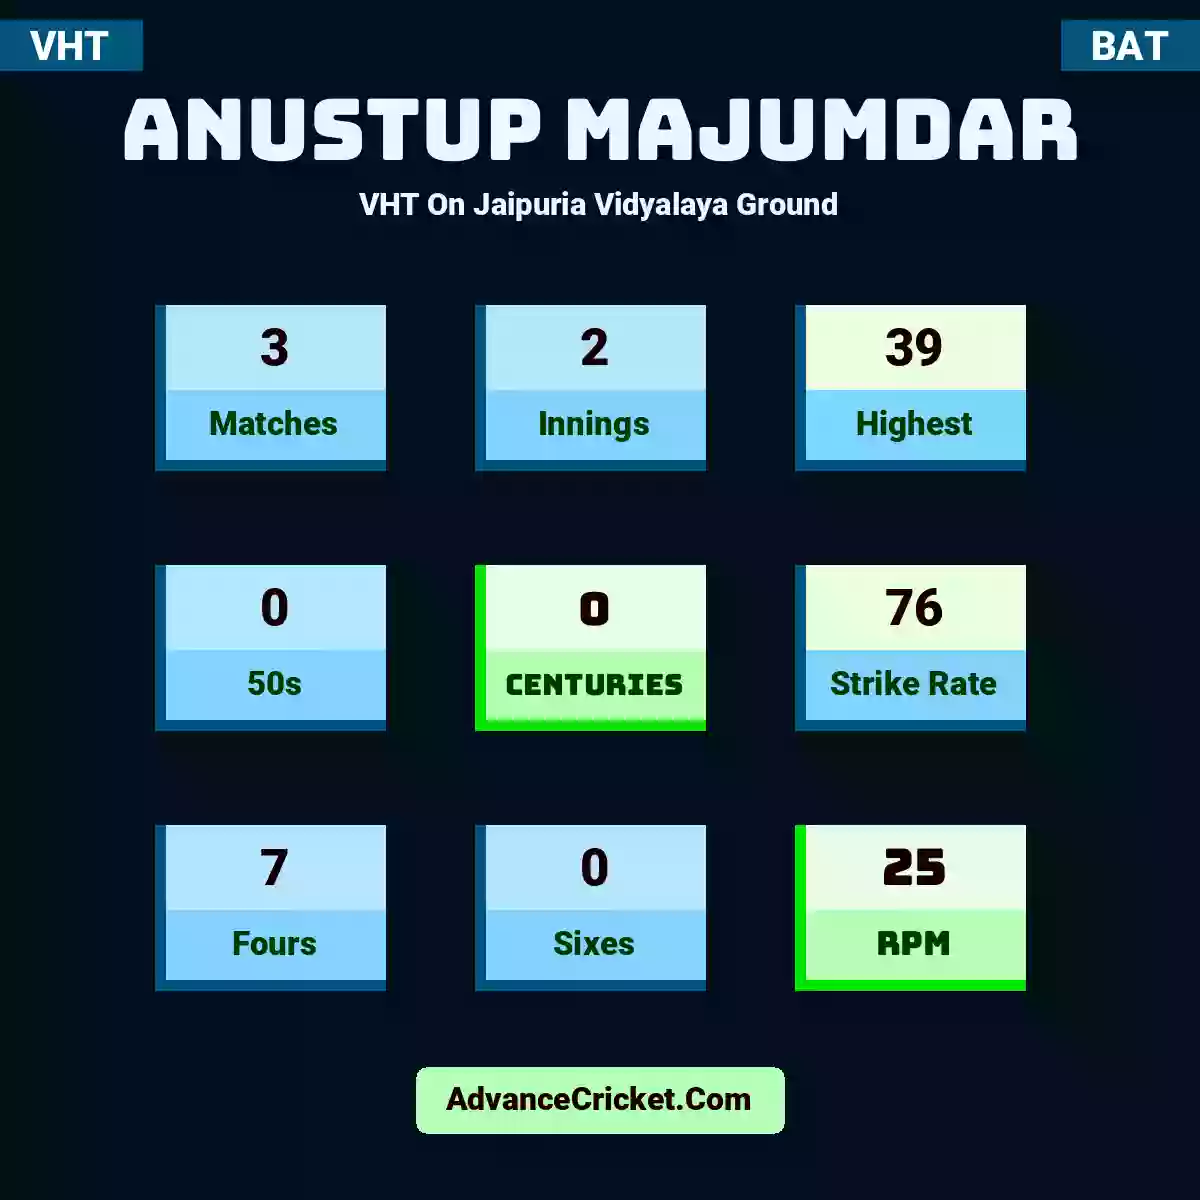 Anustup Majumdar VHT  On Jaipuria Vidyalaya Ground, Anustup Majumdar played 3 matches, scored 39 runs as highest, 0 half-centuries, and 0 centuries, with a strike rate of 76. A.Majumdar hit 7 fours and 0 sixes, with an RPM of 25.